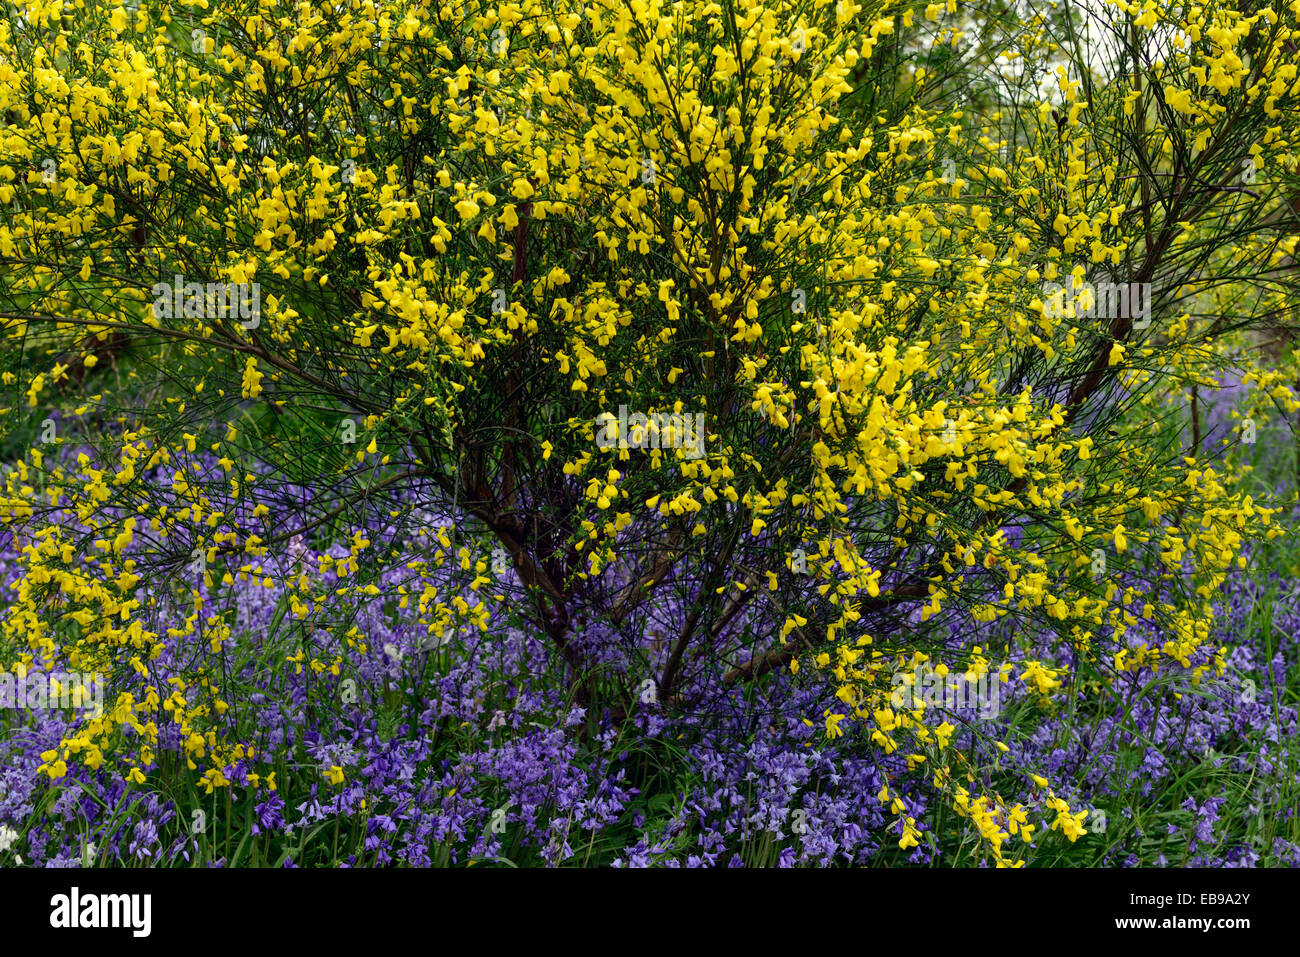 cytisus scoparius yellow flowers flowering bluebells spring display contrast cpontrasting colour colors common broom shrub Stock Photo